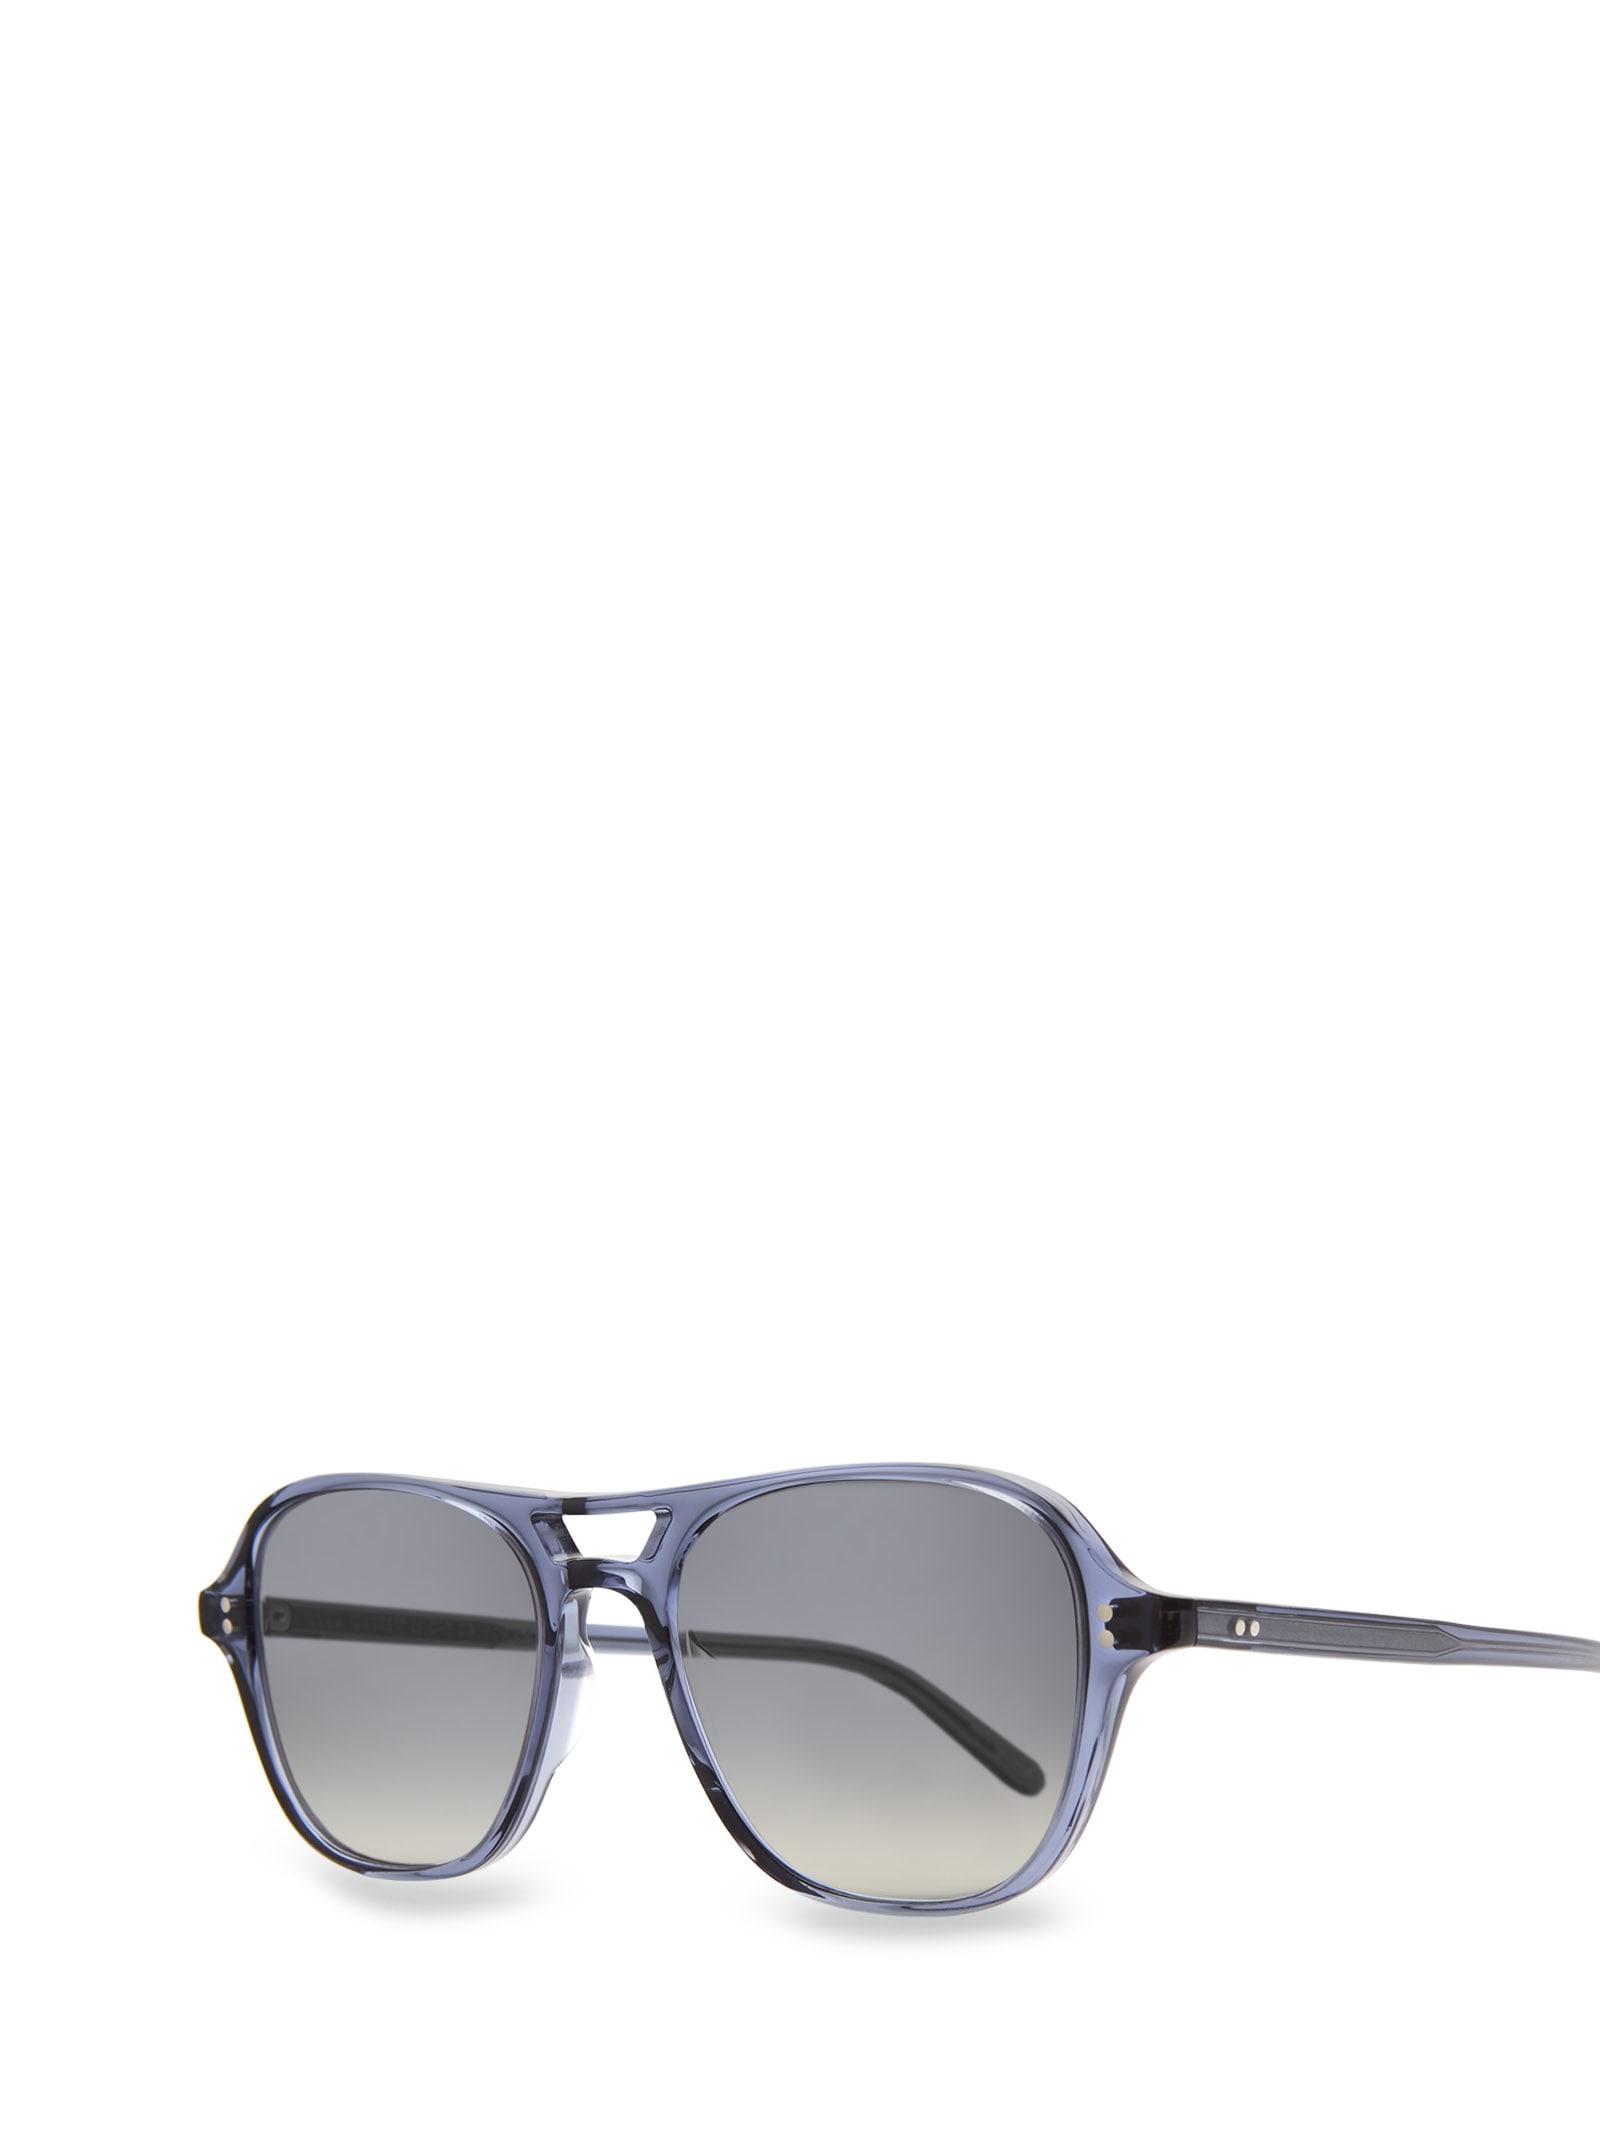 Garrett Leight Doc Sun Pacific Blue Sunglasses in Gray | Lyst